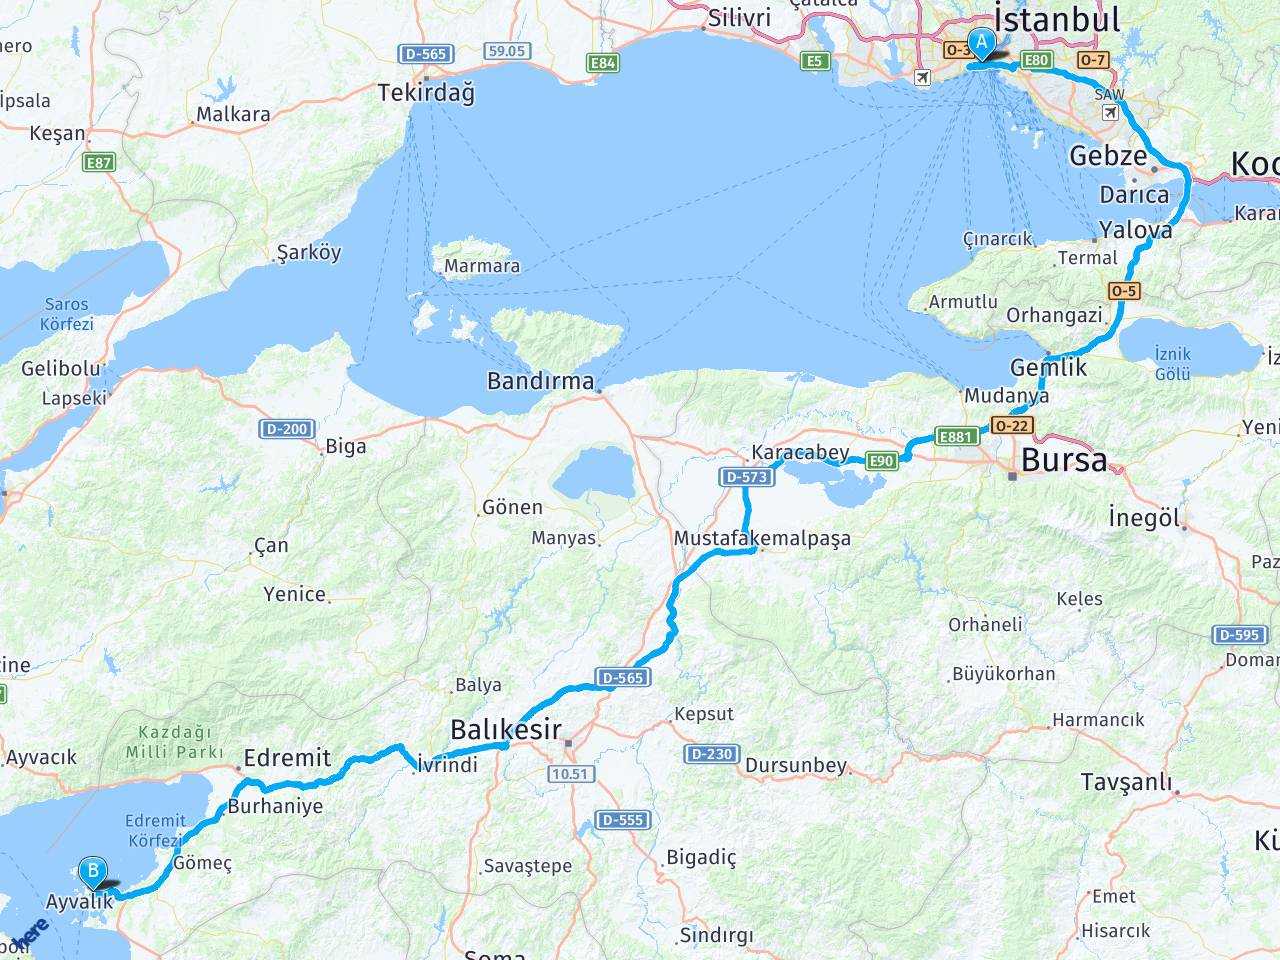 istanbul cunda ayvalik arasi mesafe istanbul cunda ayvalik yol haritasi istanbul cunda ayvalik kac saat kac km